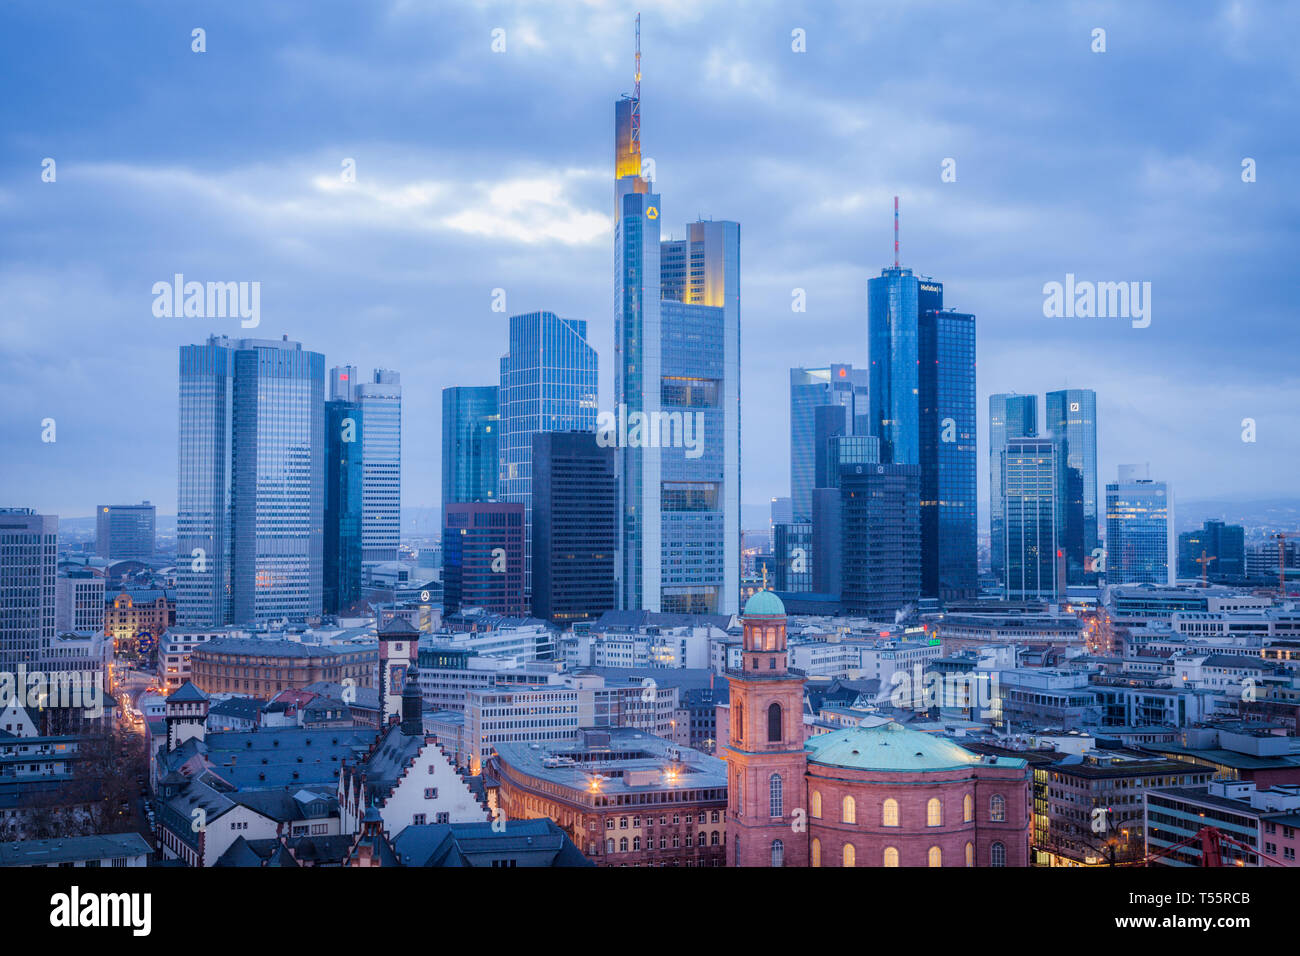 Skyline al atardecer en Frankfurt, Alemania Foto de stock